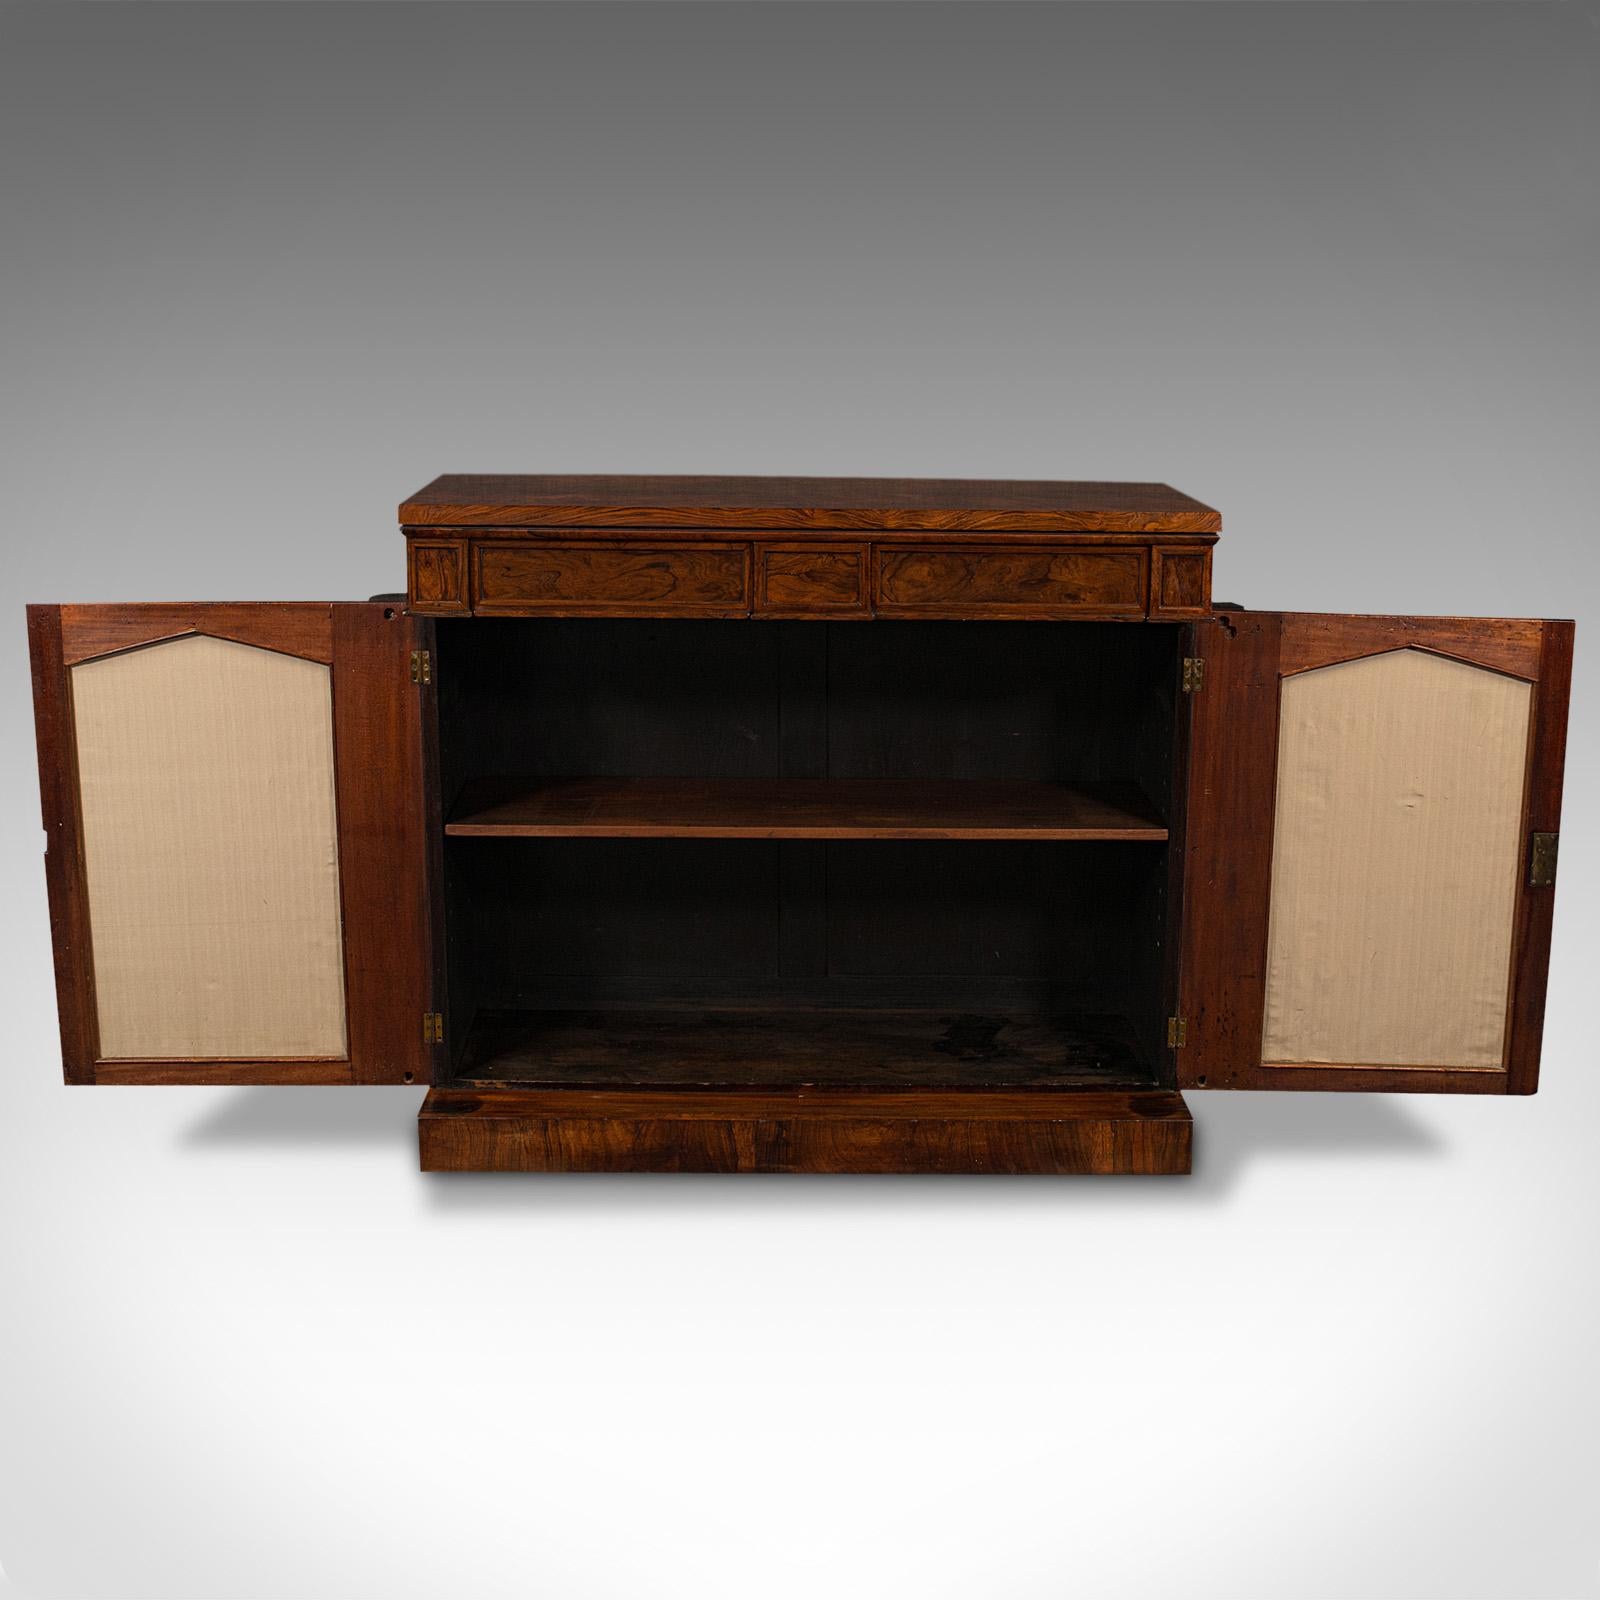 British Antique Breakfront Book Cabinet, English, Chiffonier, Sideboard, William IV